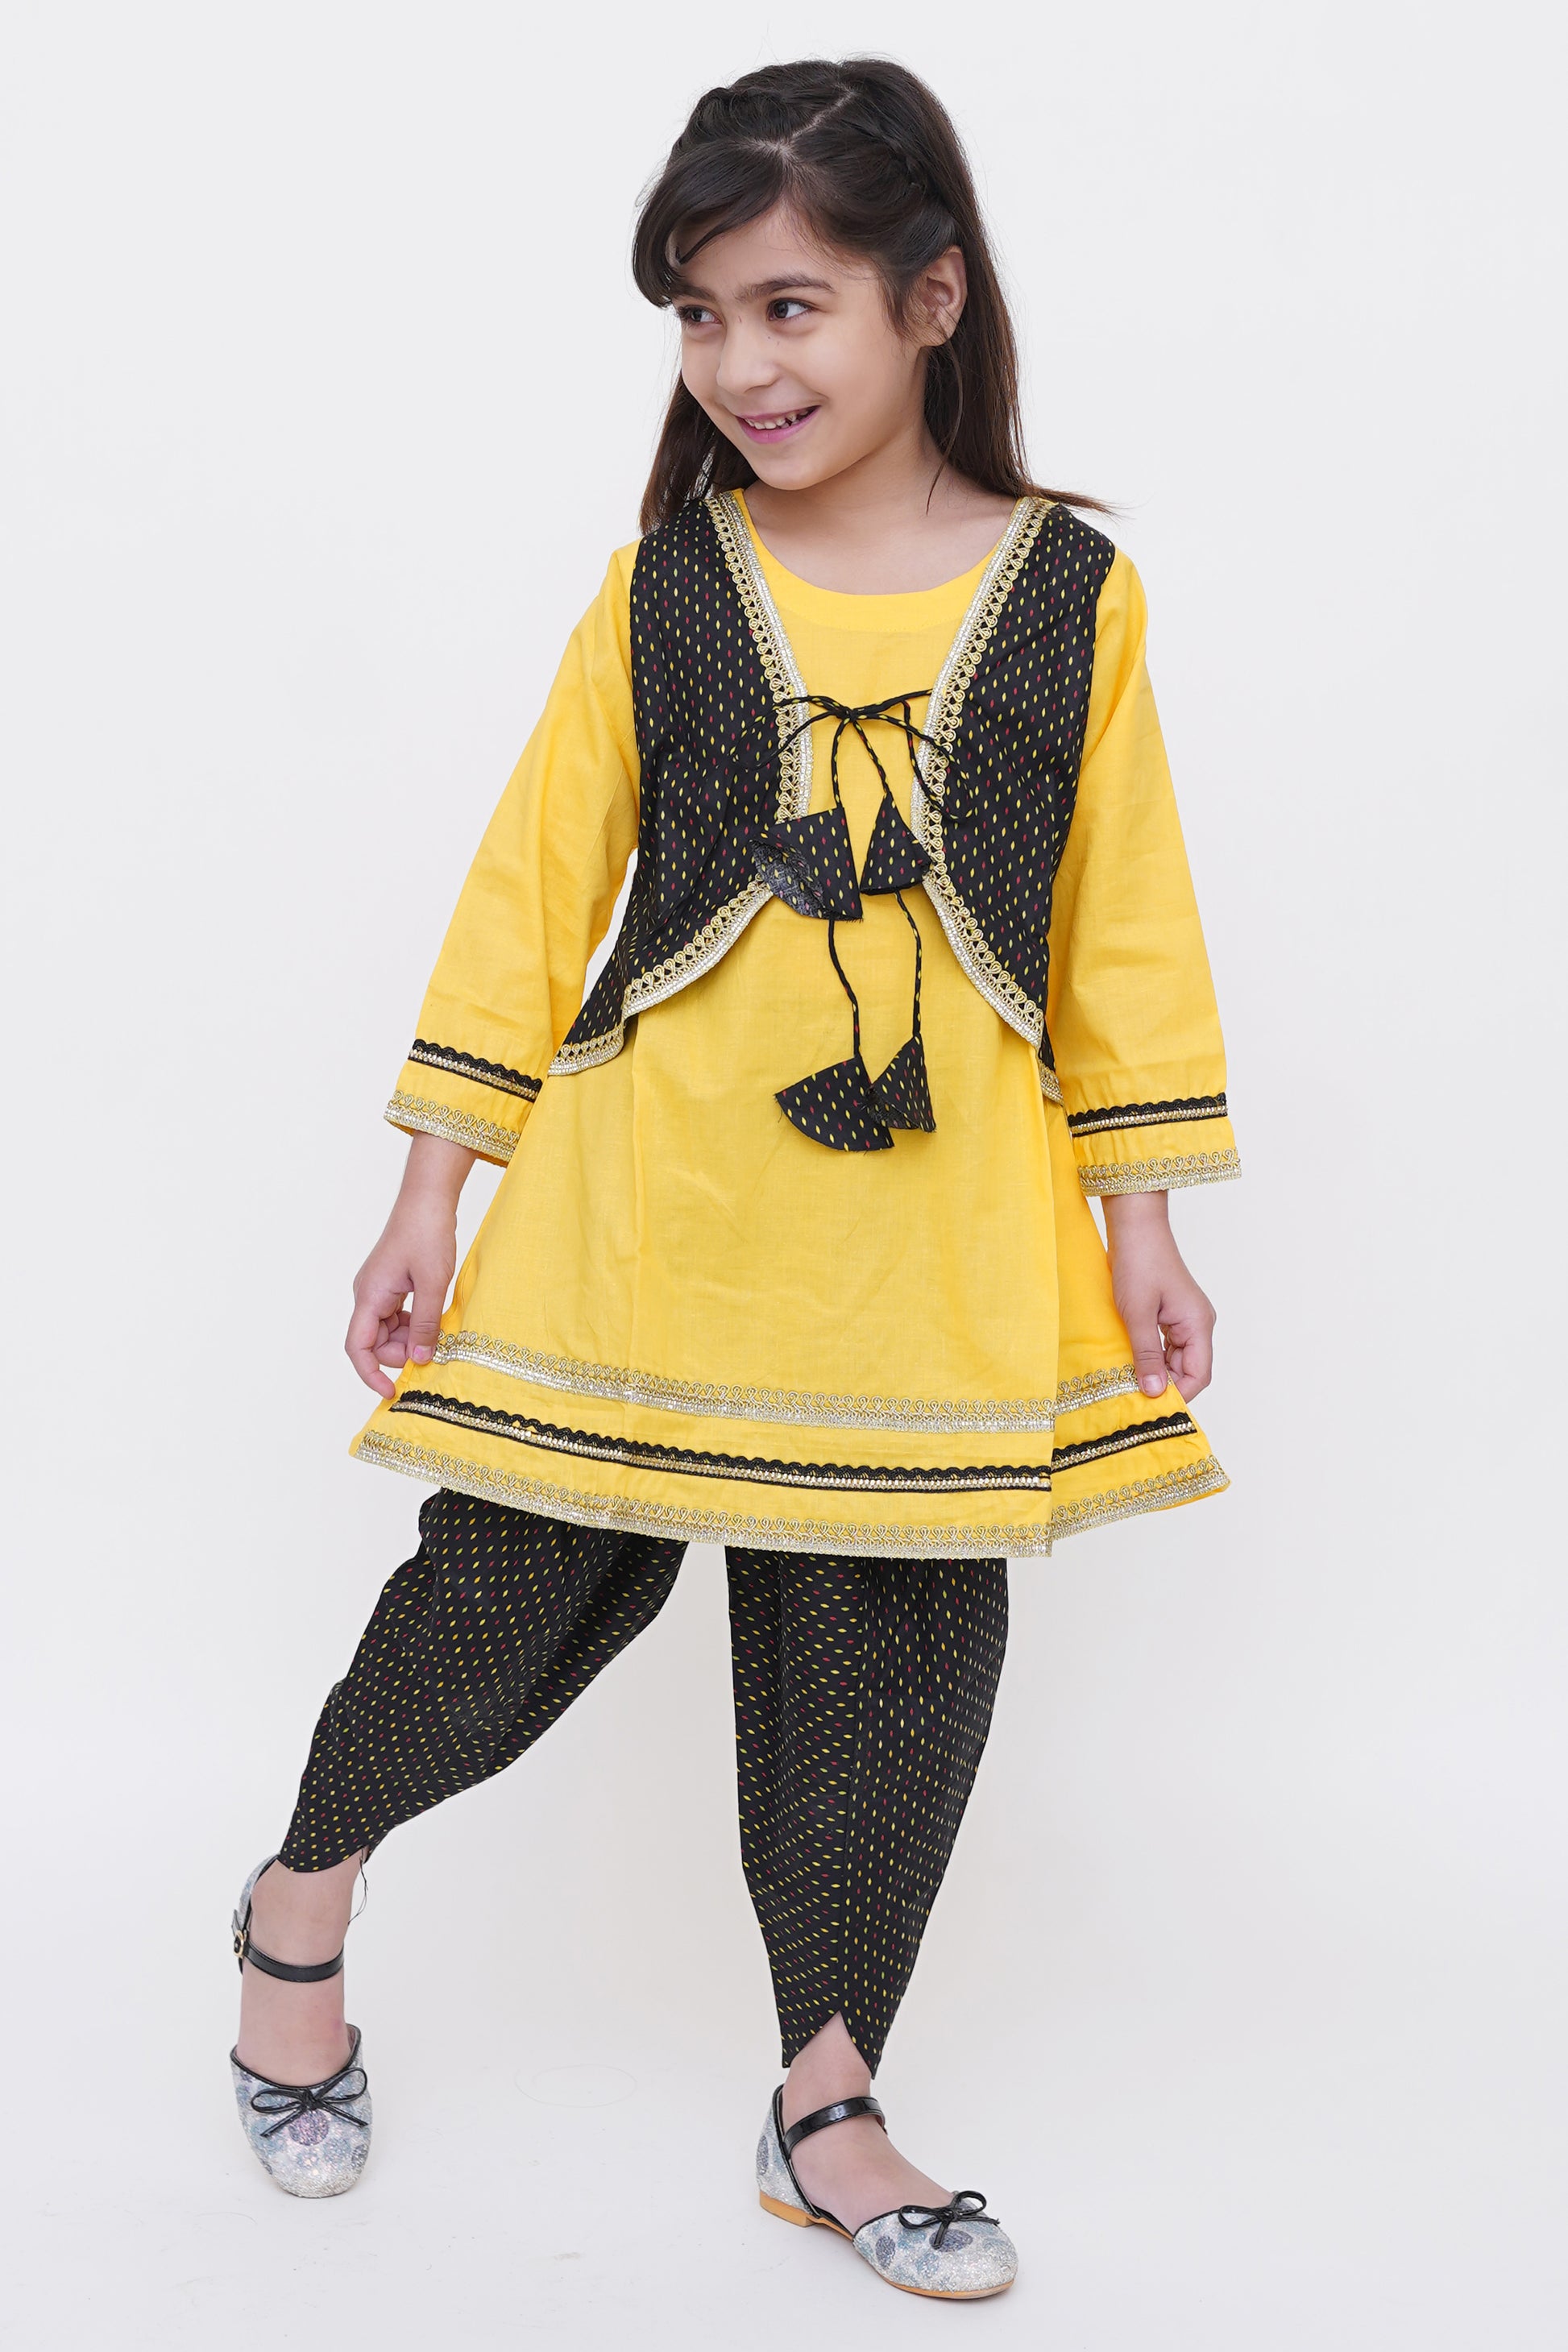 koti style Frock & Kurti designs ideas 2023 | jacket style dress for girls  - YouTube